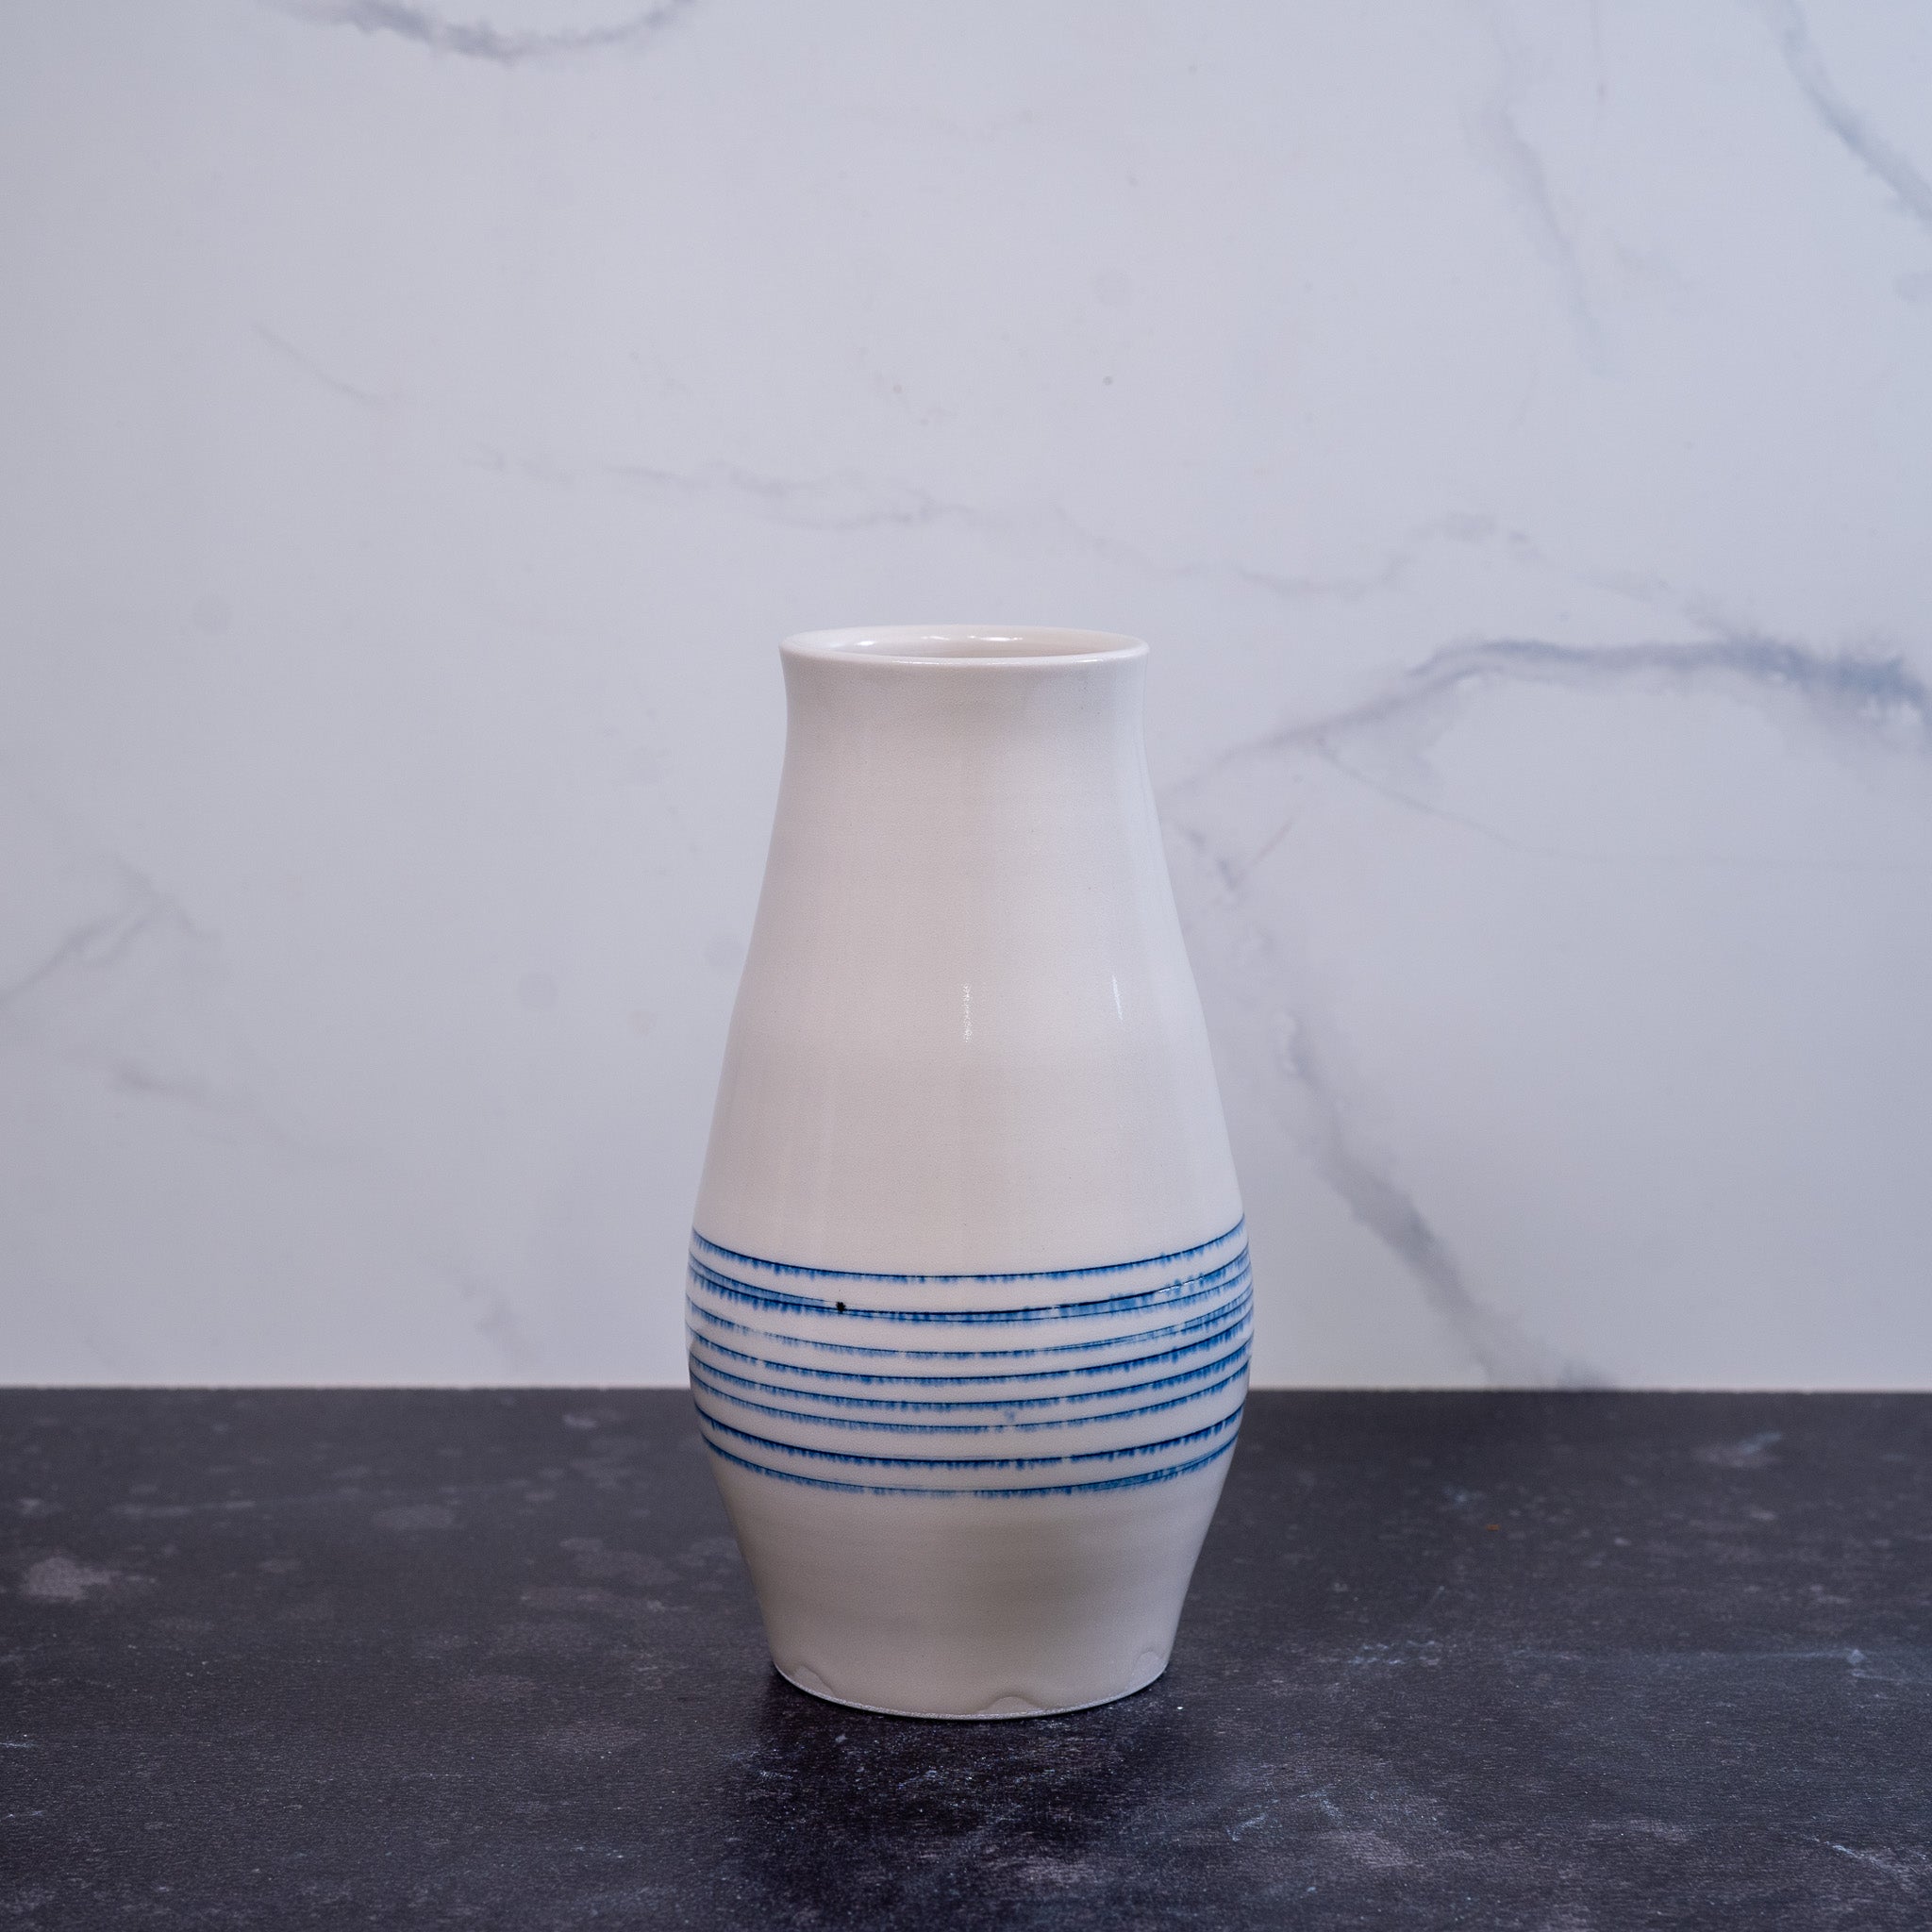 Ltd. Edition Vase 2023-018